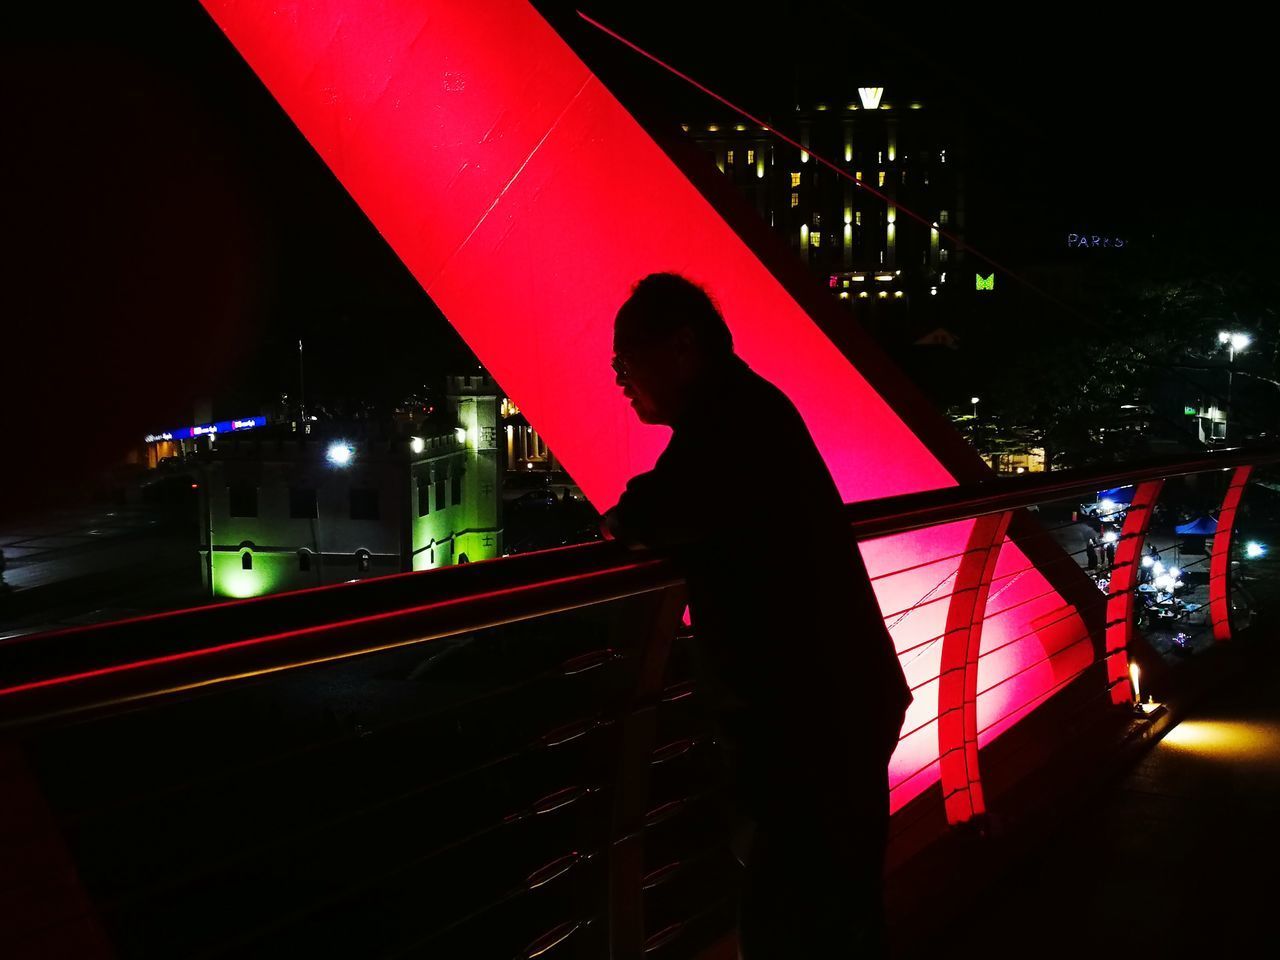 SILHOUETTE MAN STANDING BY ILLUMINATED BRIDGE AT NIGHT IN CITY